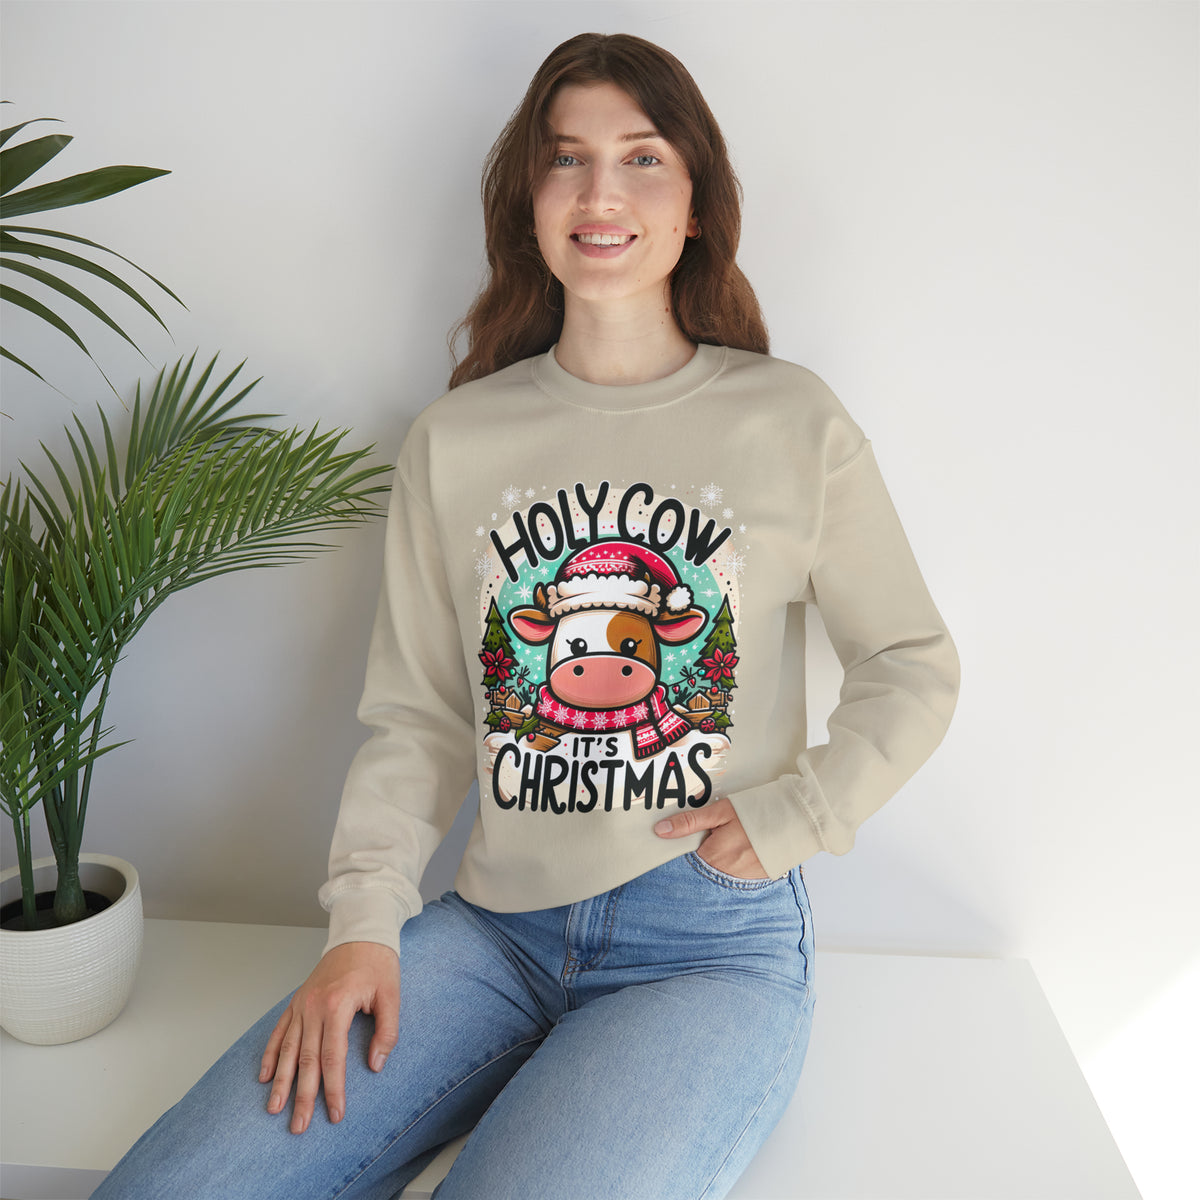 Holy Cow It's Christmas Sweatshirt | Cute Cow Shirt | Farm Girl Gift | Cow Christmas Shirt  | Unisex Crewneck Sweatshirt